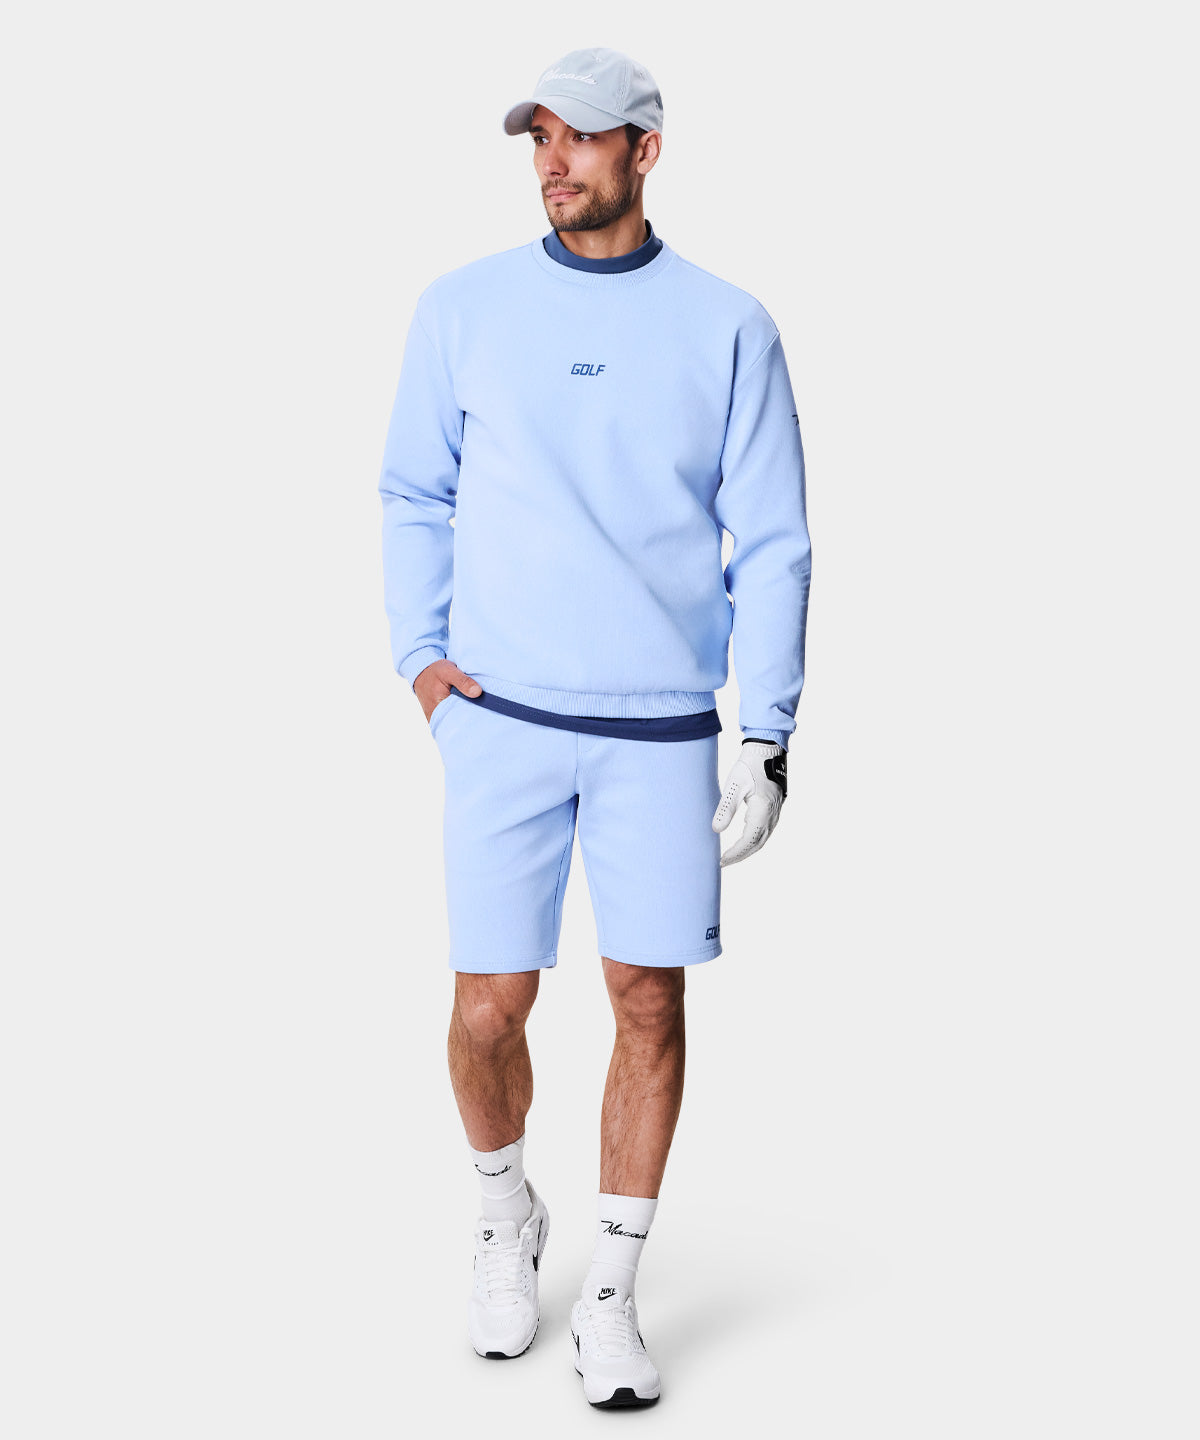 Powder Blue Range Shorts Macade Golf